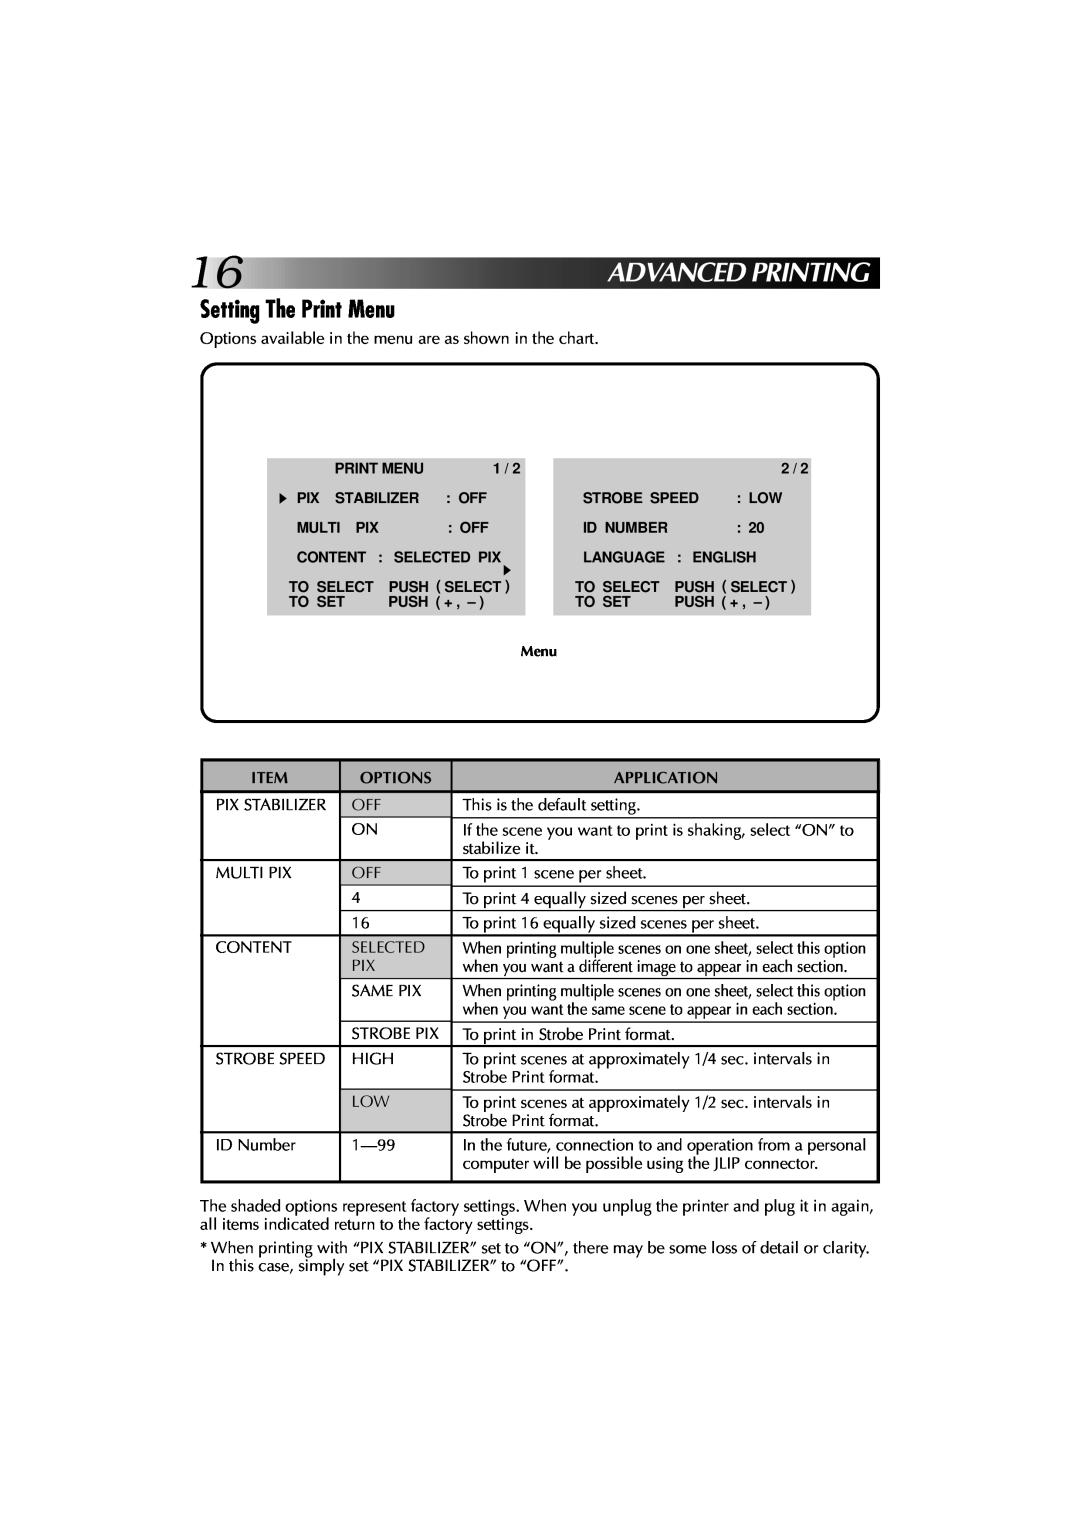 JVC GV-PT1 manual 16ADVANCED PRINTING, Setting The Print Menu, Options, Application 